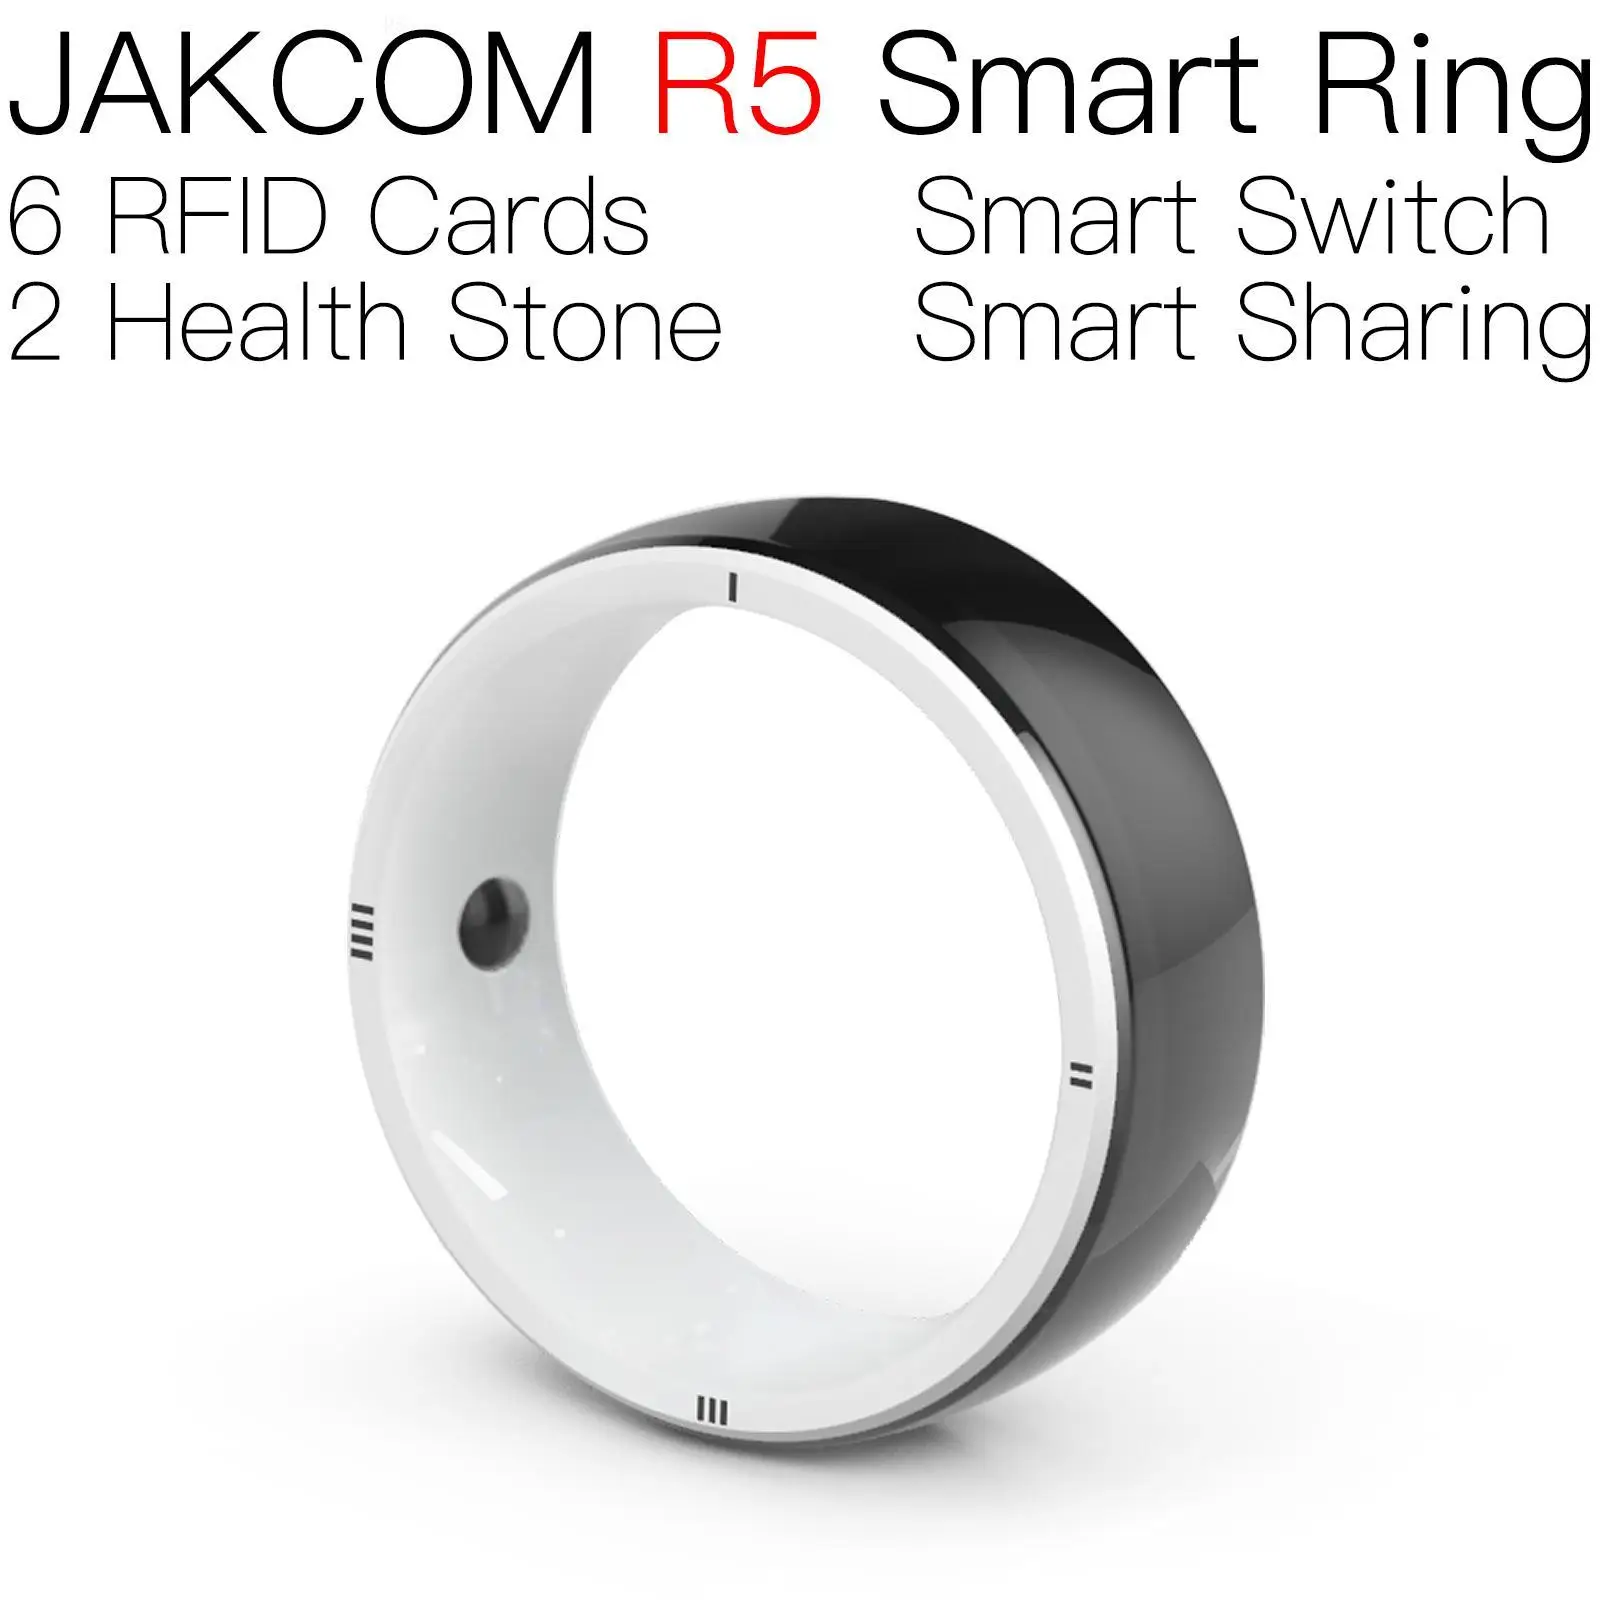 

JAKCOM R5 Smart Ring Nice than tag pet electronic price label pvc rfid uhf k1108 s50 sticker uid printable nfc